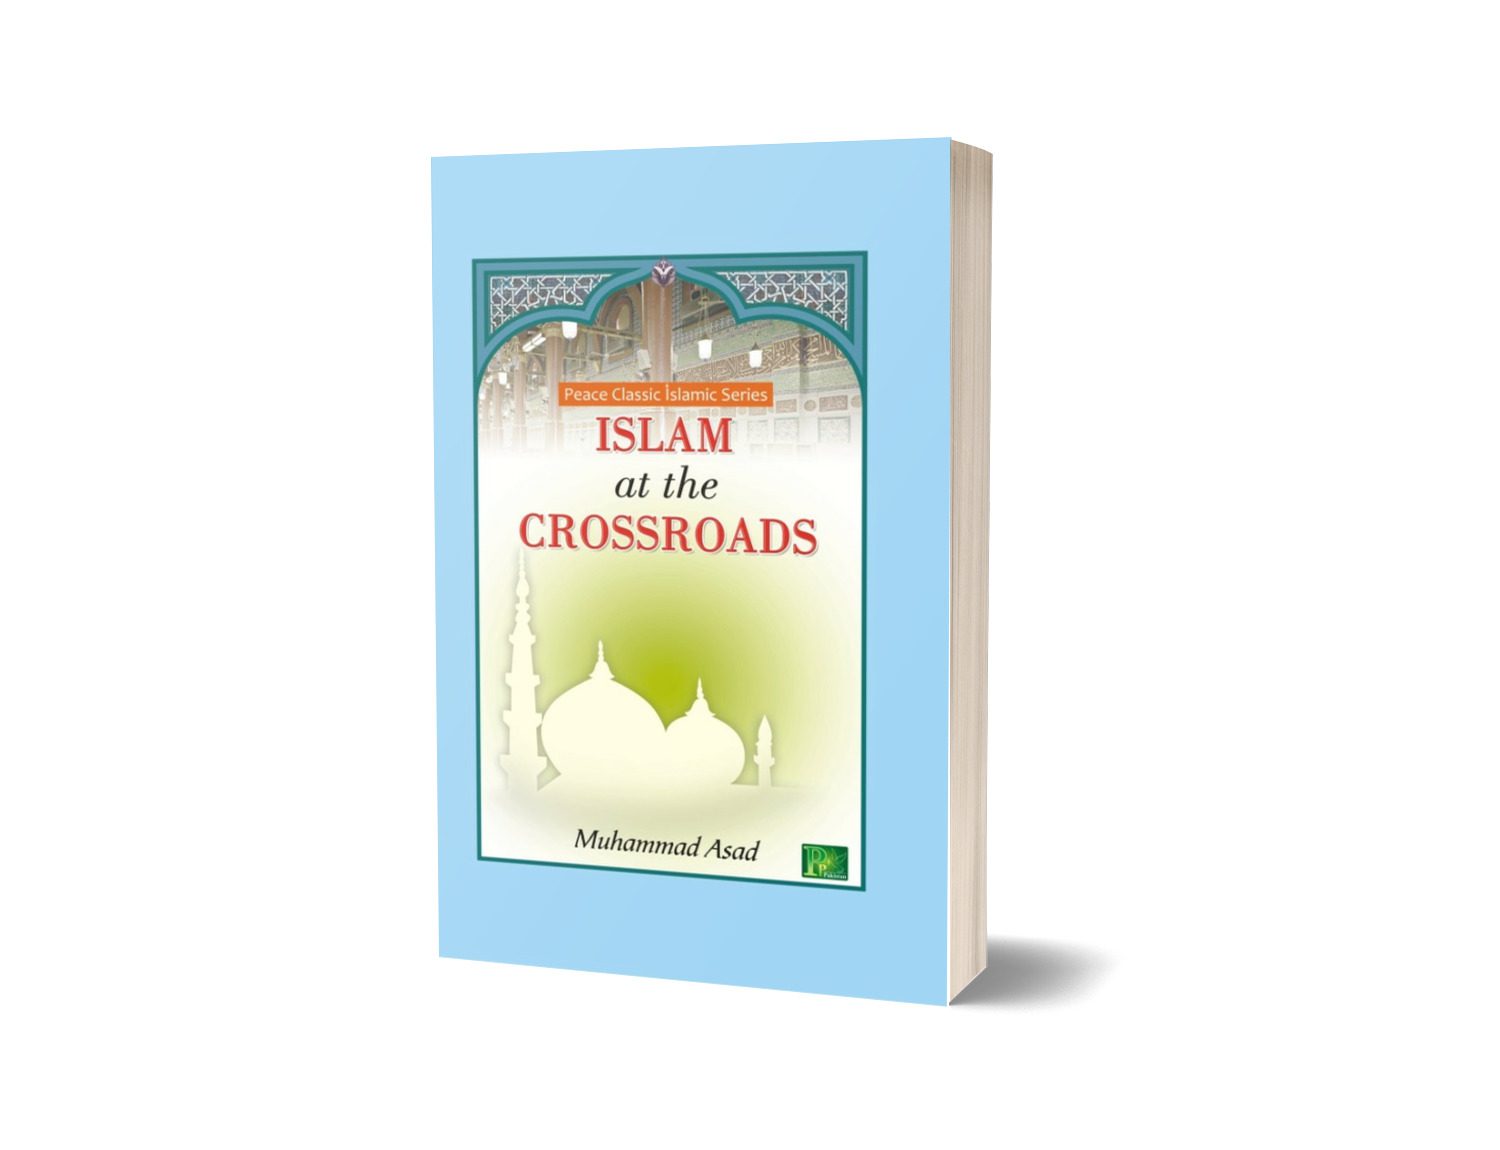 Islam at the CROSSROADS BY MUHAMMAD ASAD